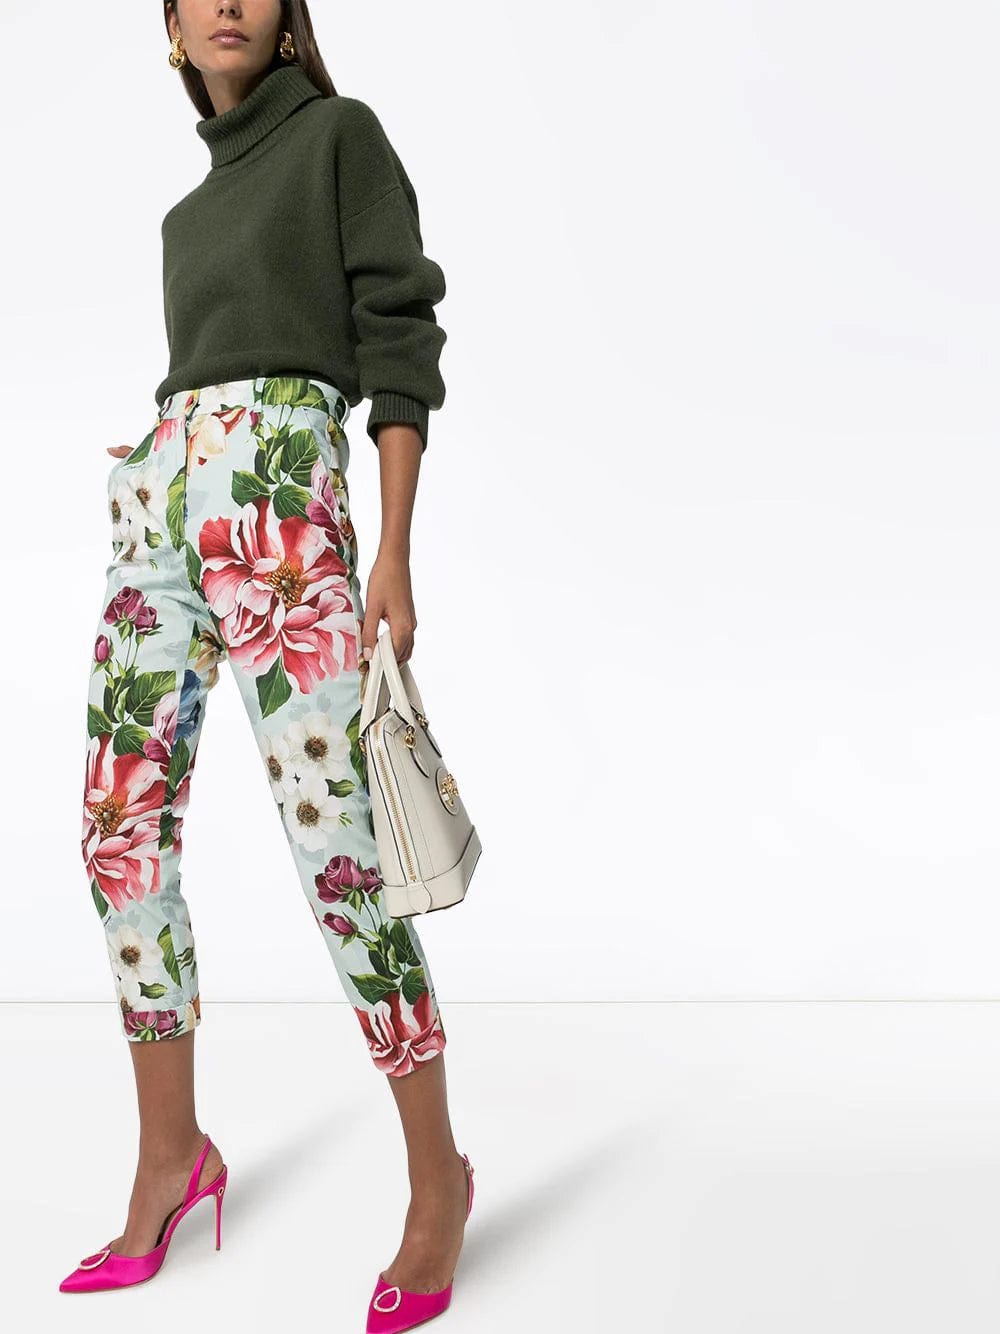 Dolce & Gabbana Cropped Floral-Print Pants